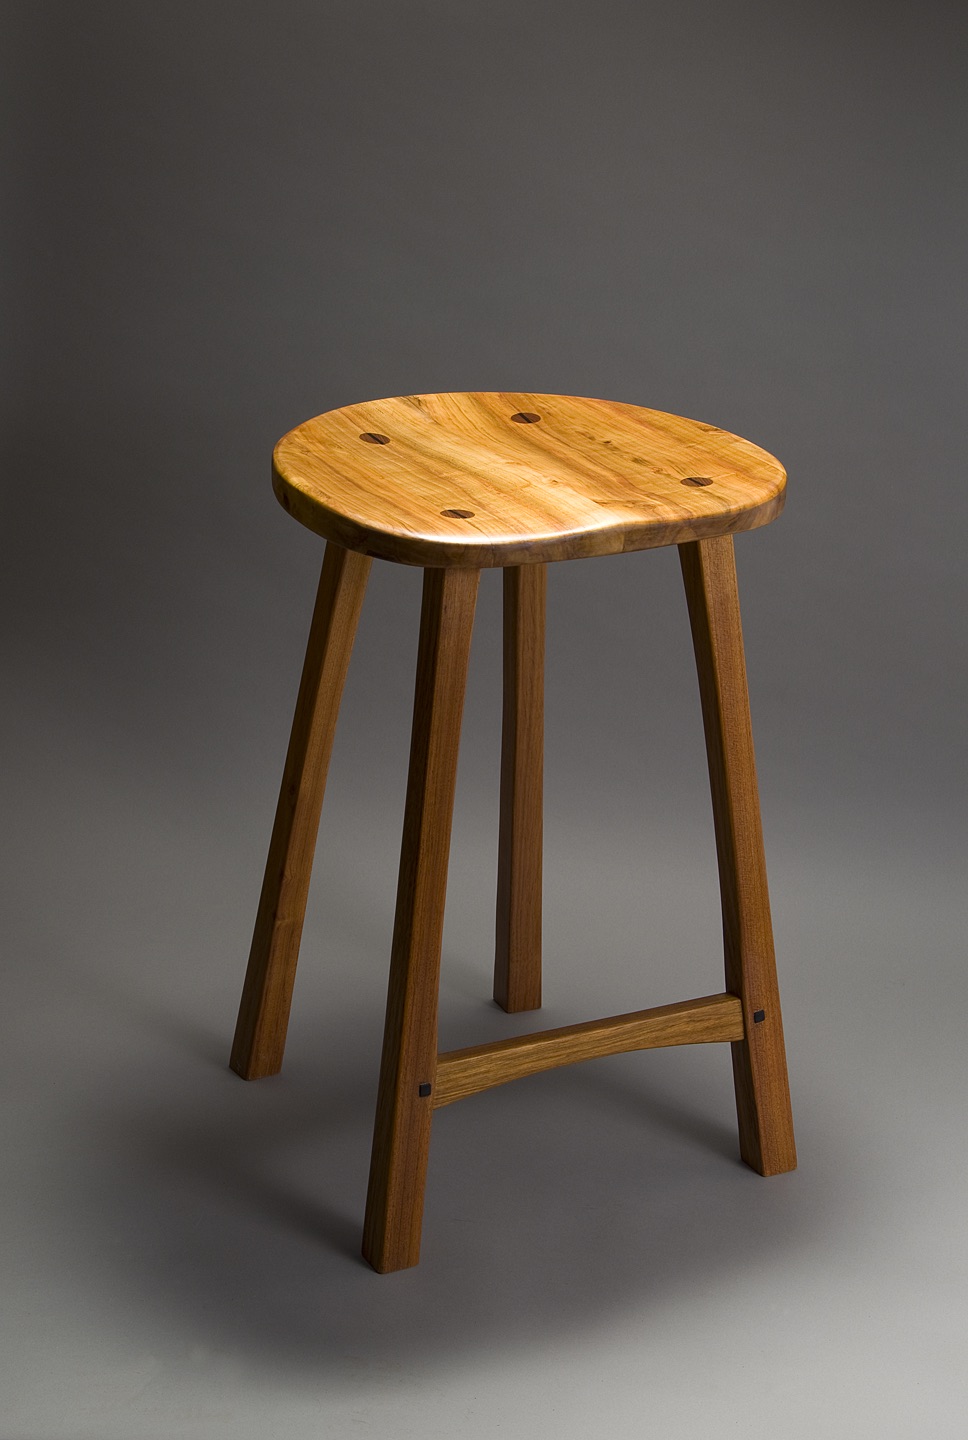 Plum stool